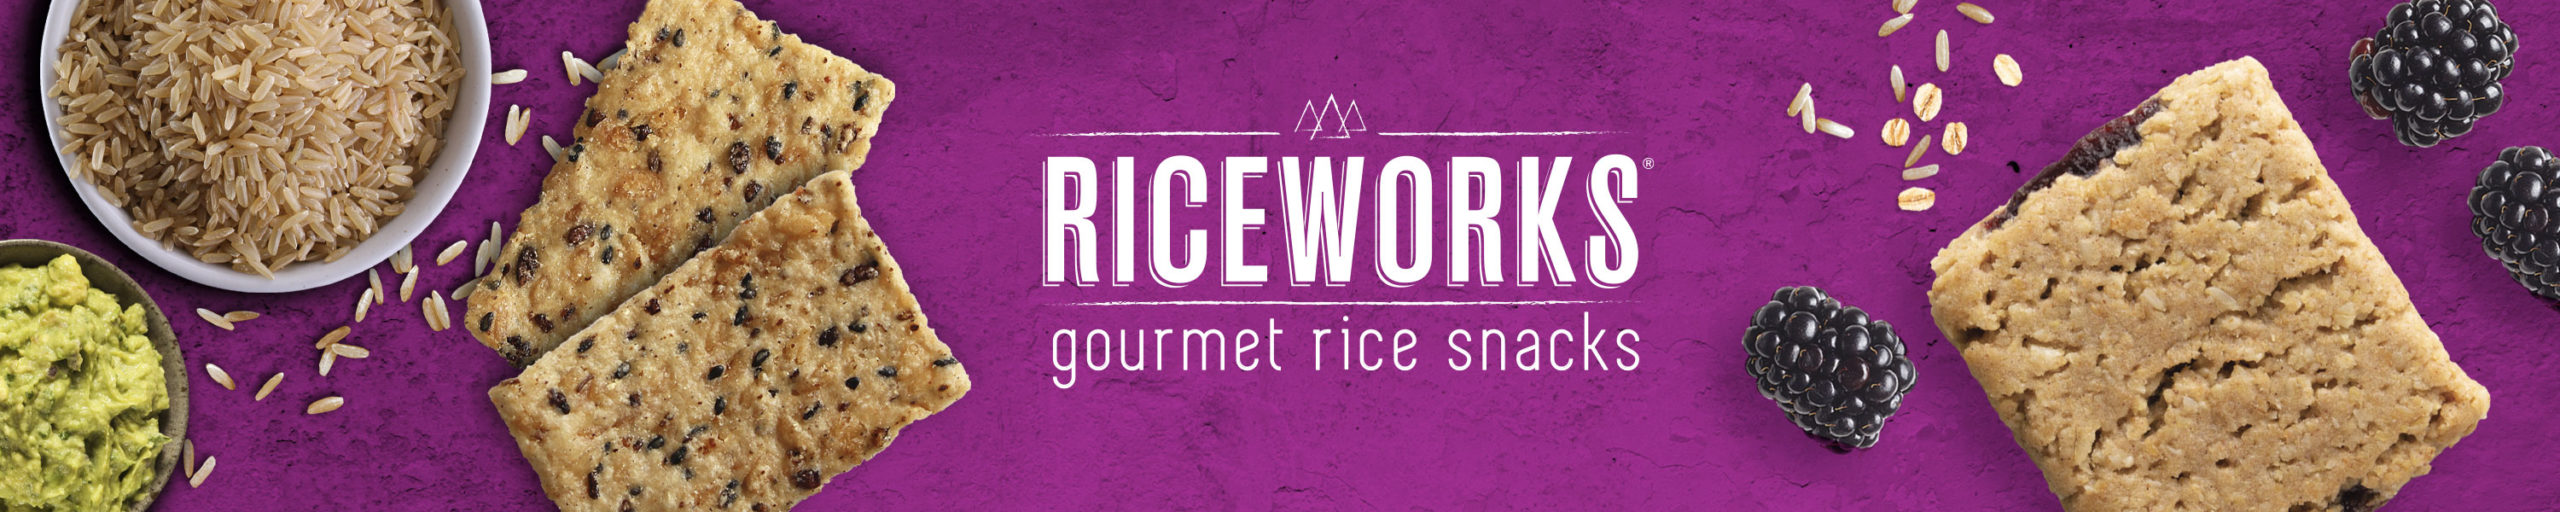 Riceworks Gourmet Rice Snacks